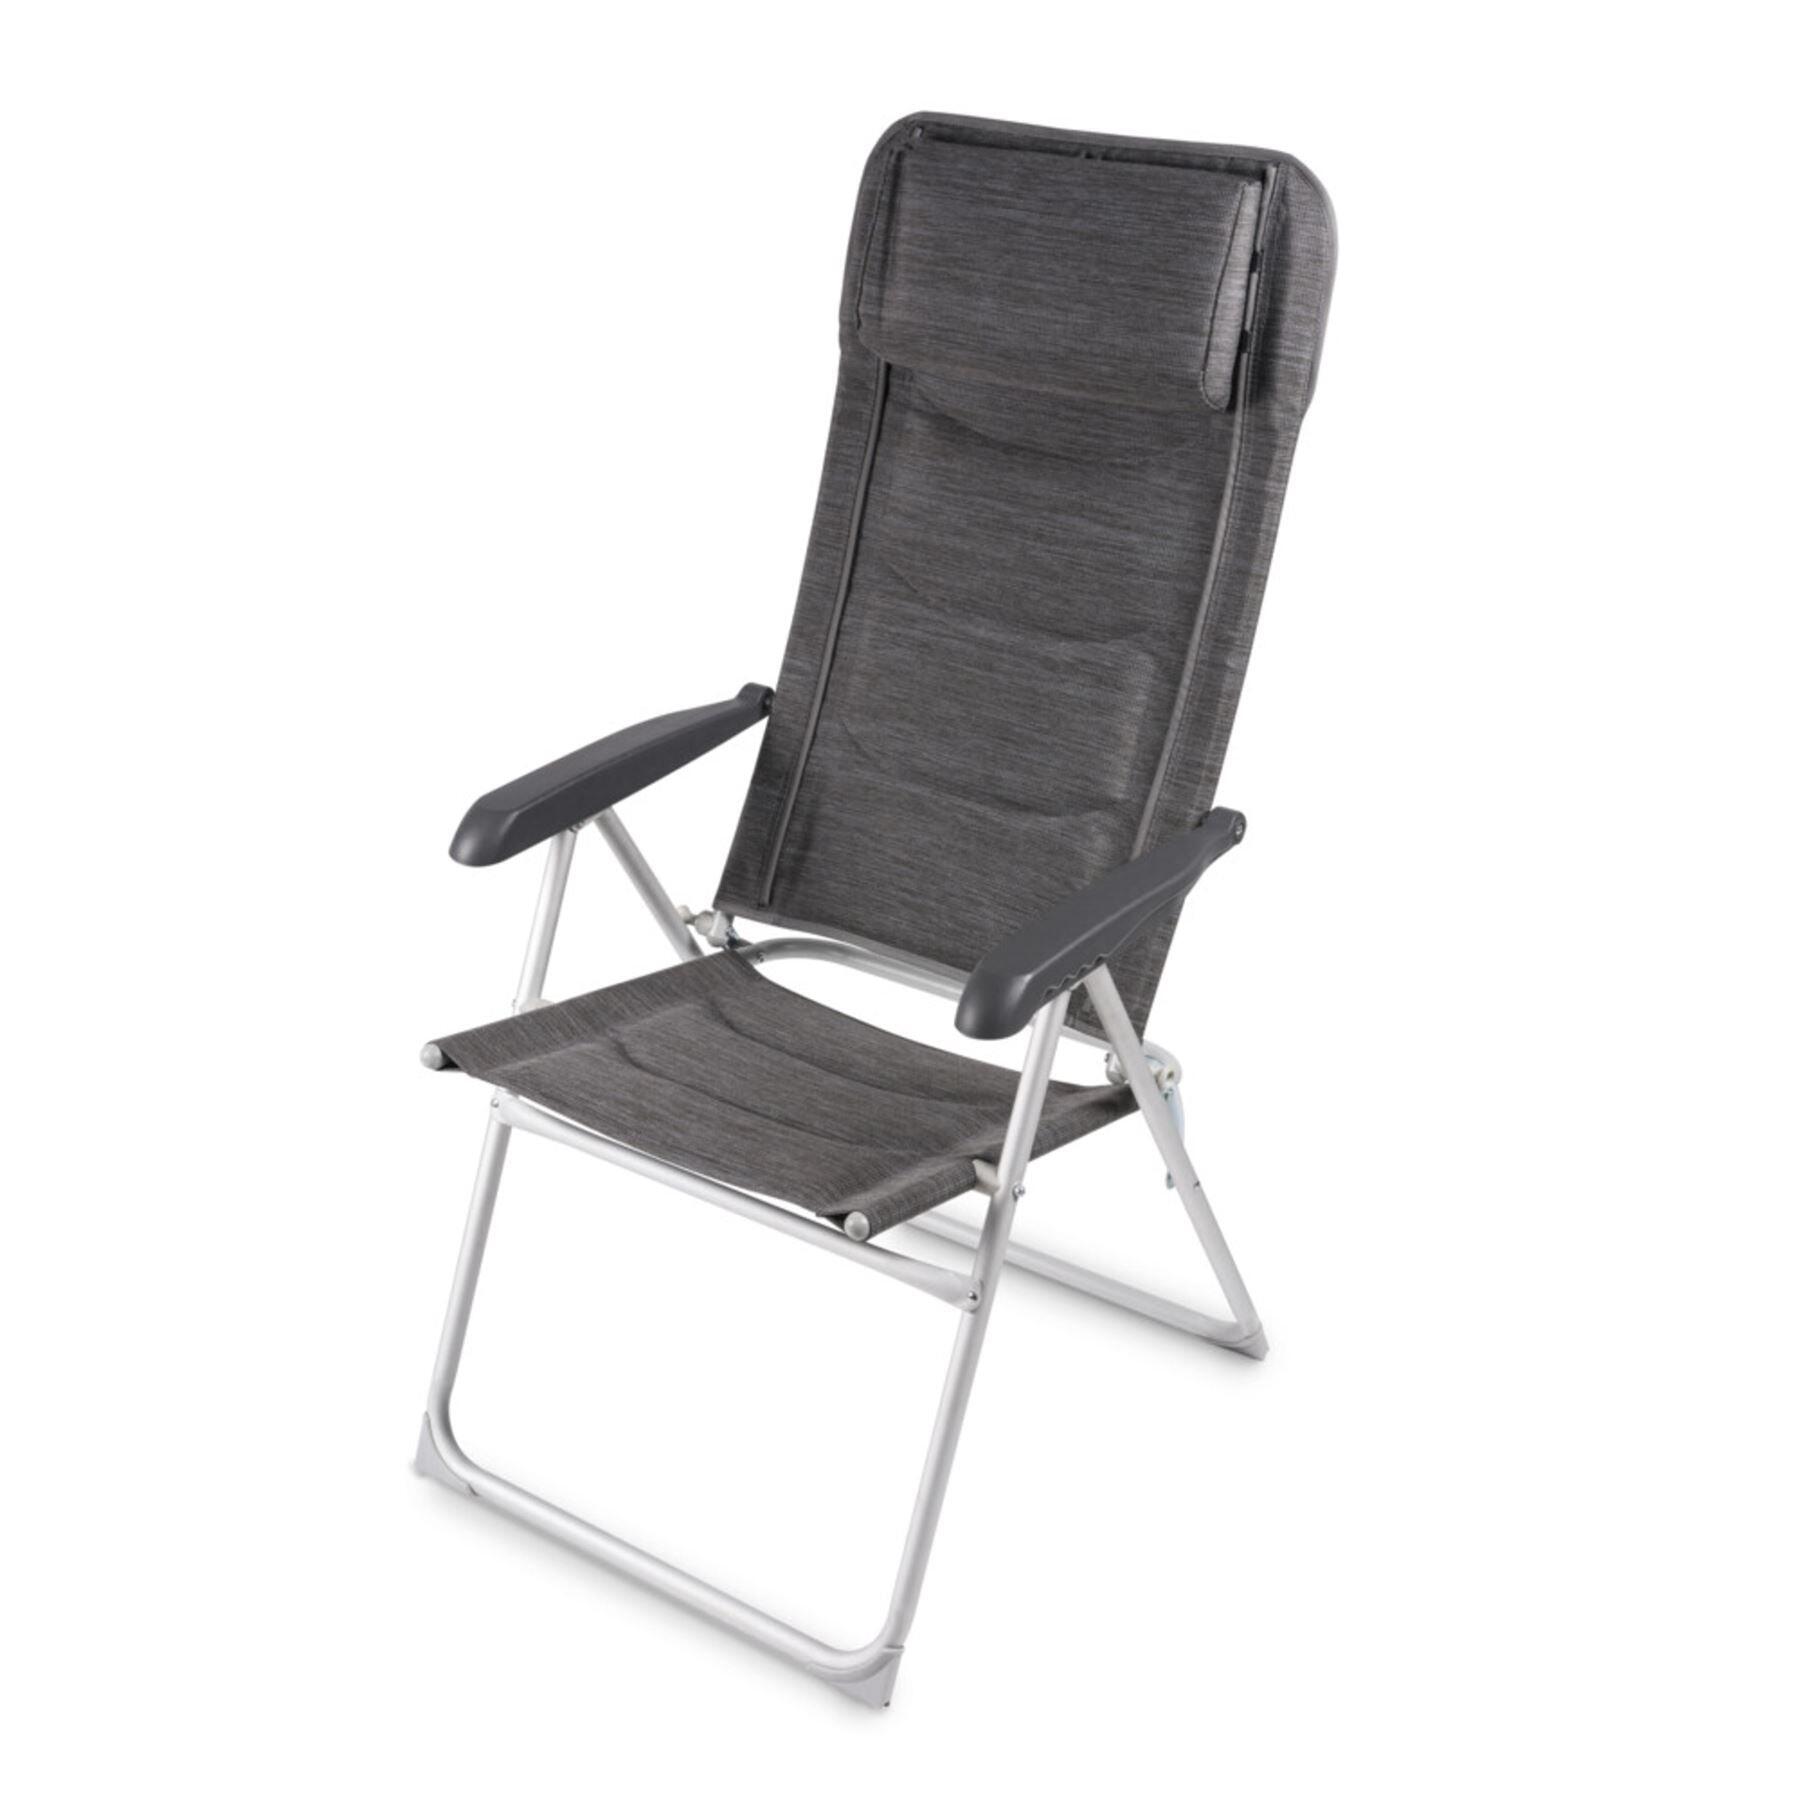 DOMETIC Dometic Comfort Modena Chair Grey